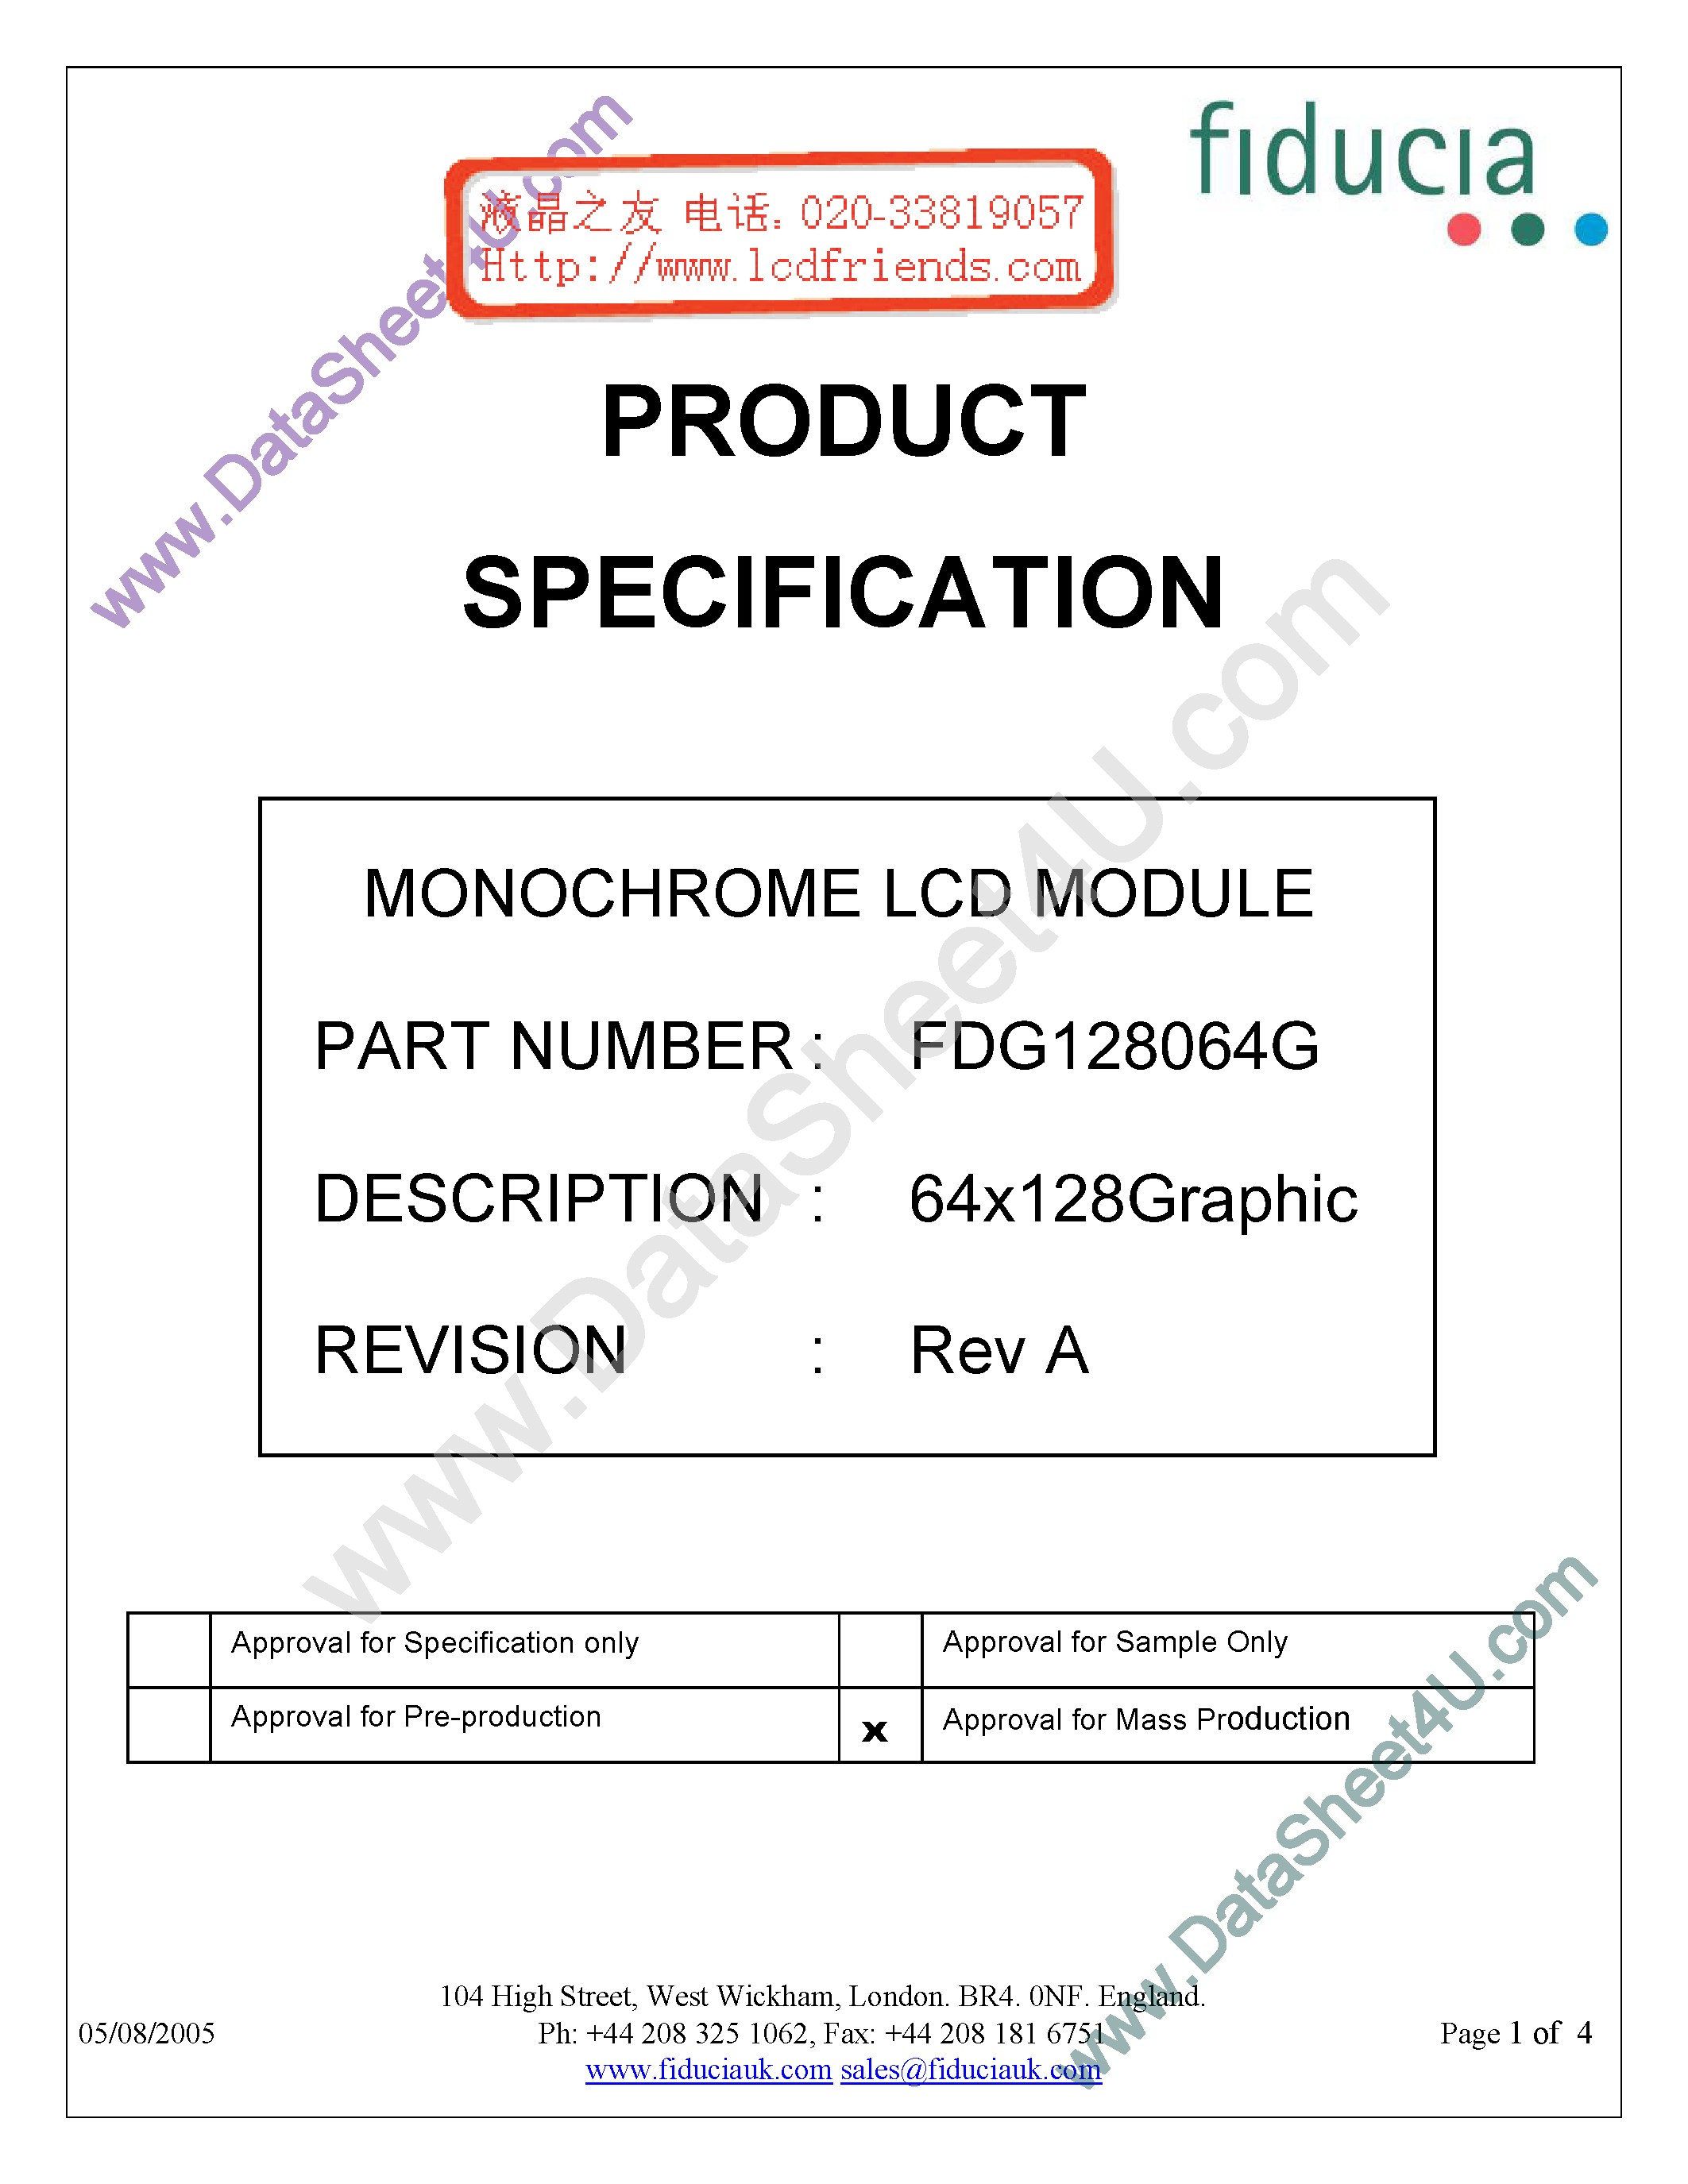 Даташит FDG128064G-Monochrome Lcd Module страница 1